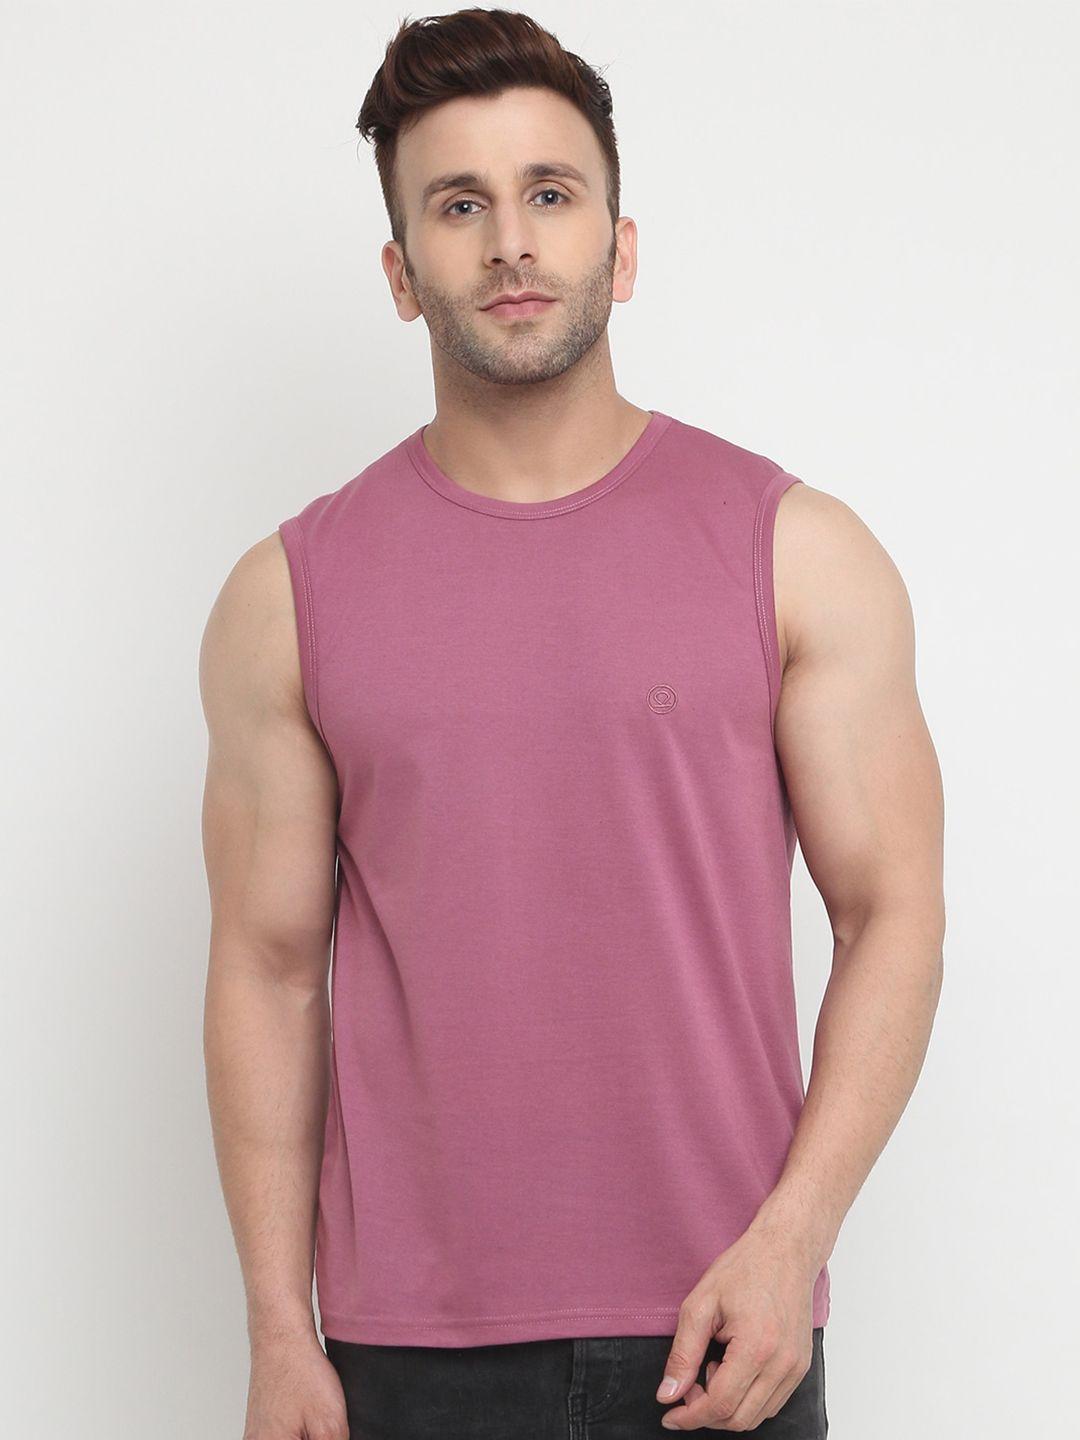 chkokko men pink solid cotton t-shirt